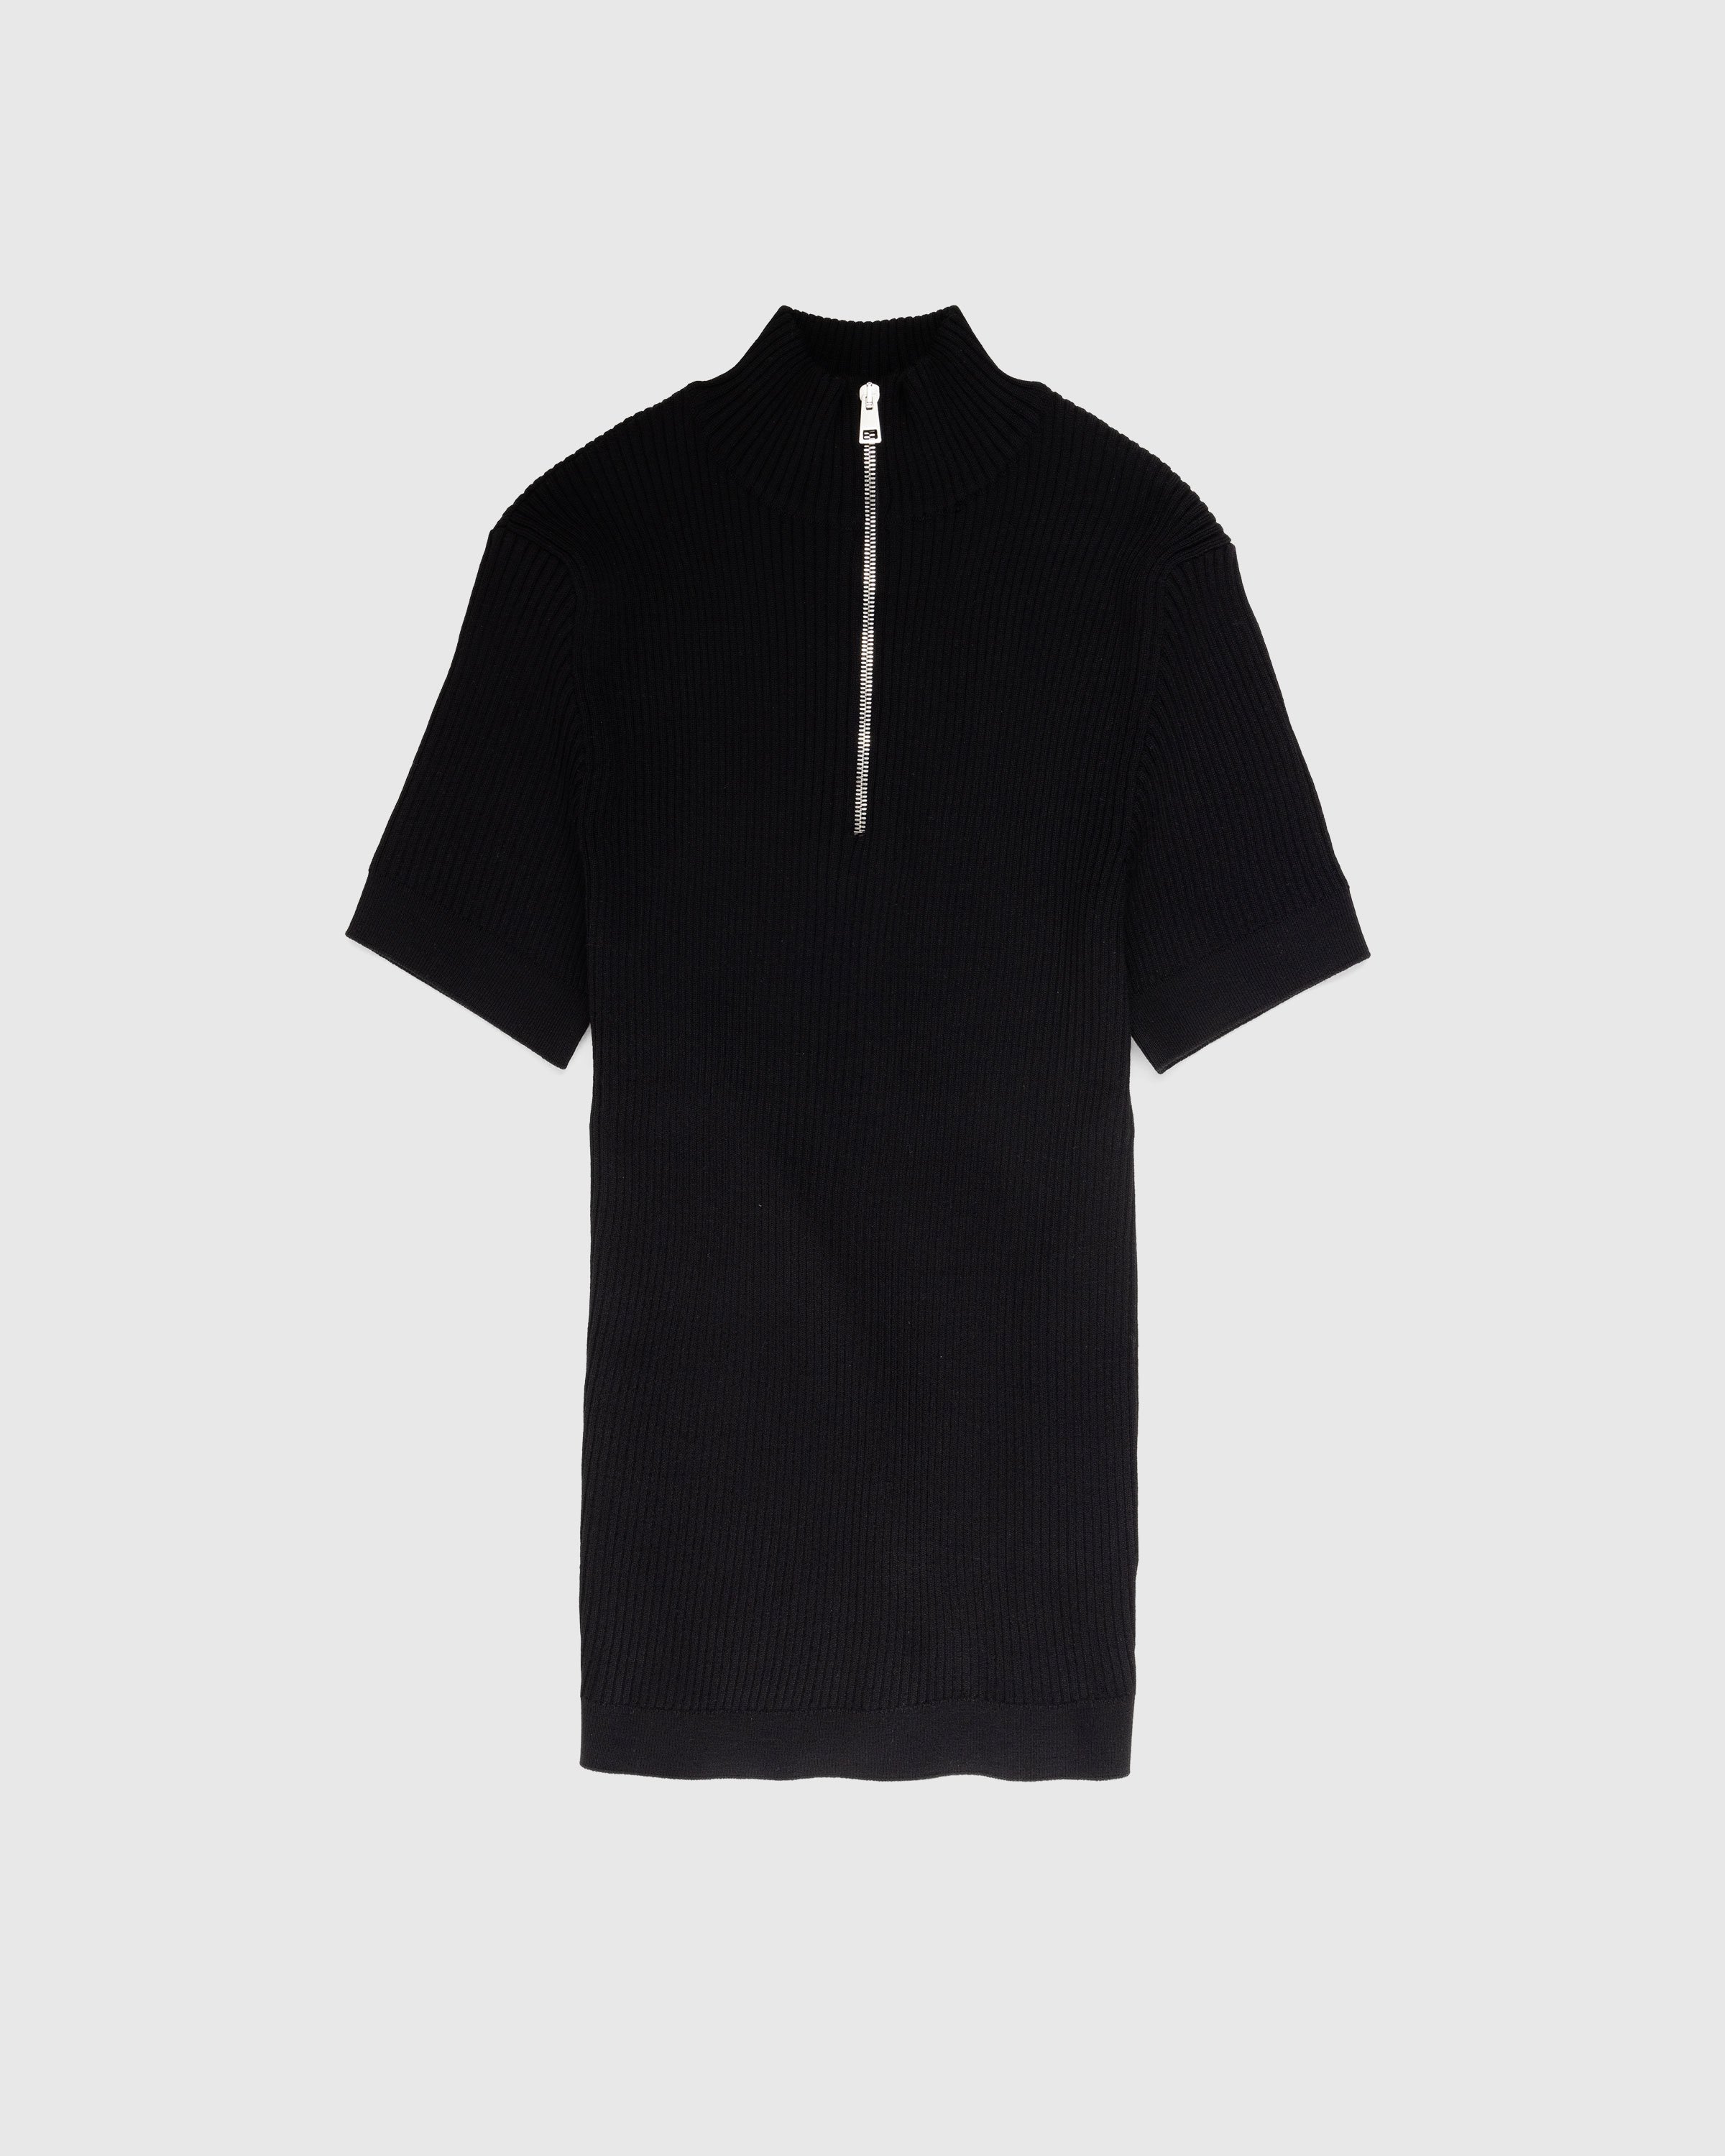 Winnie New York - Quarter-Zip Wool Top Black - Clothing - Black - Image 1